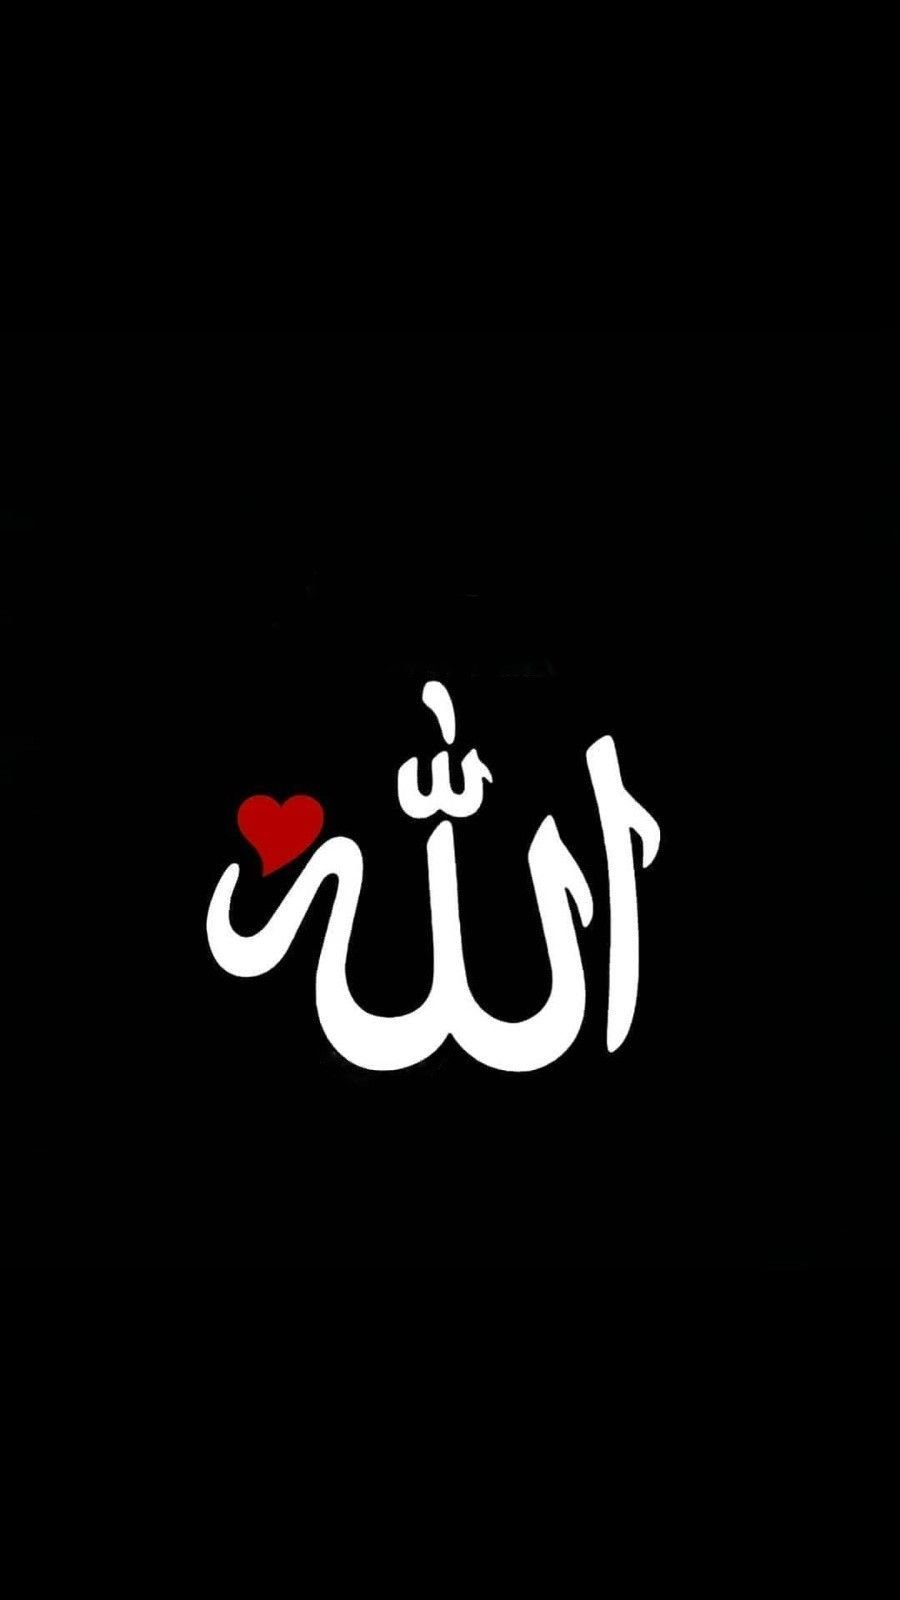 Allah - Black Background